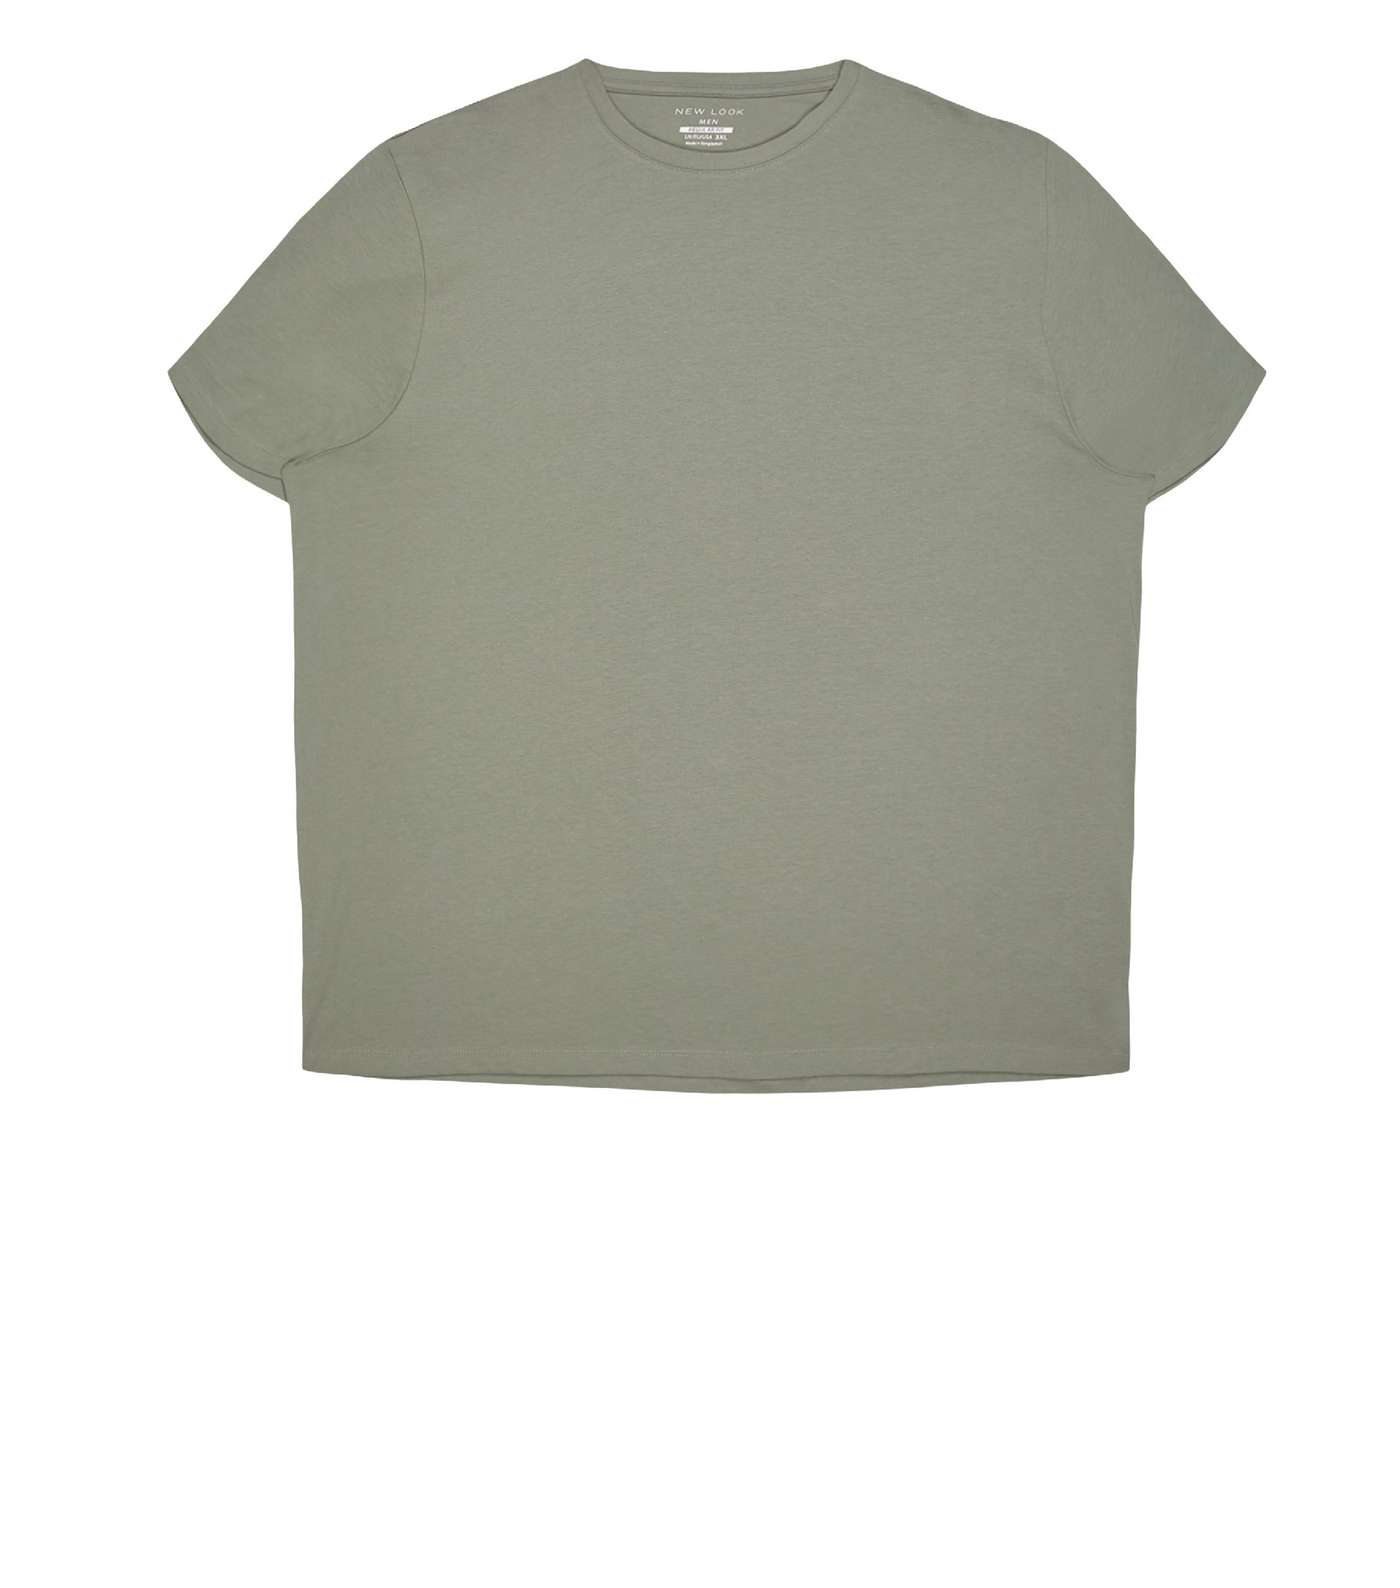 Plus Size Olive Crew T-Shirt Image 4